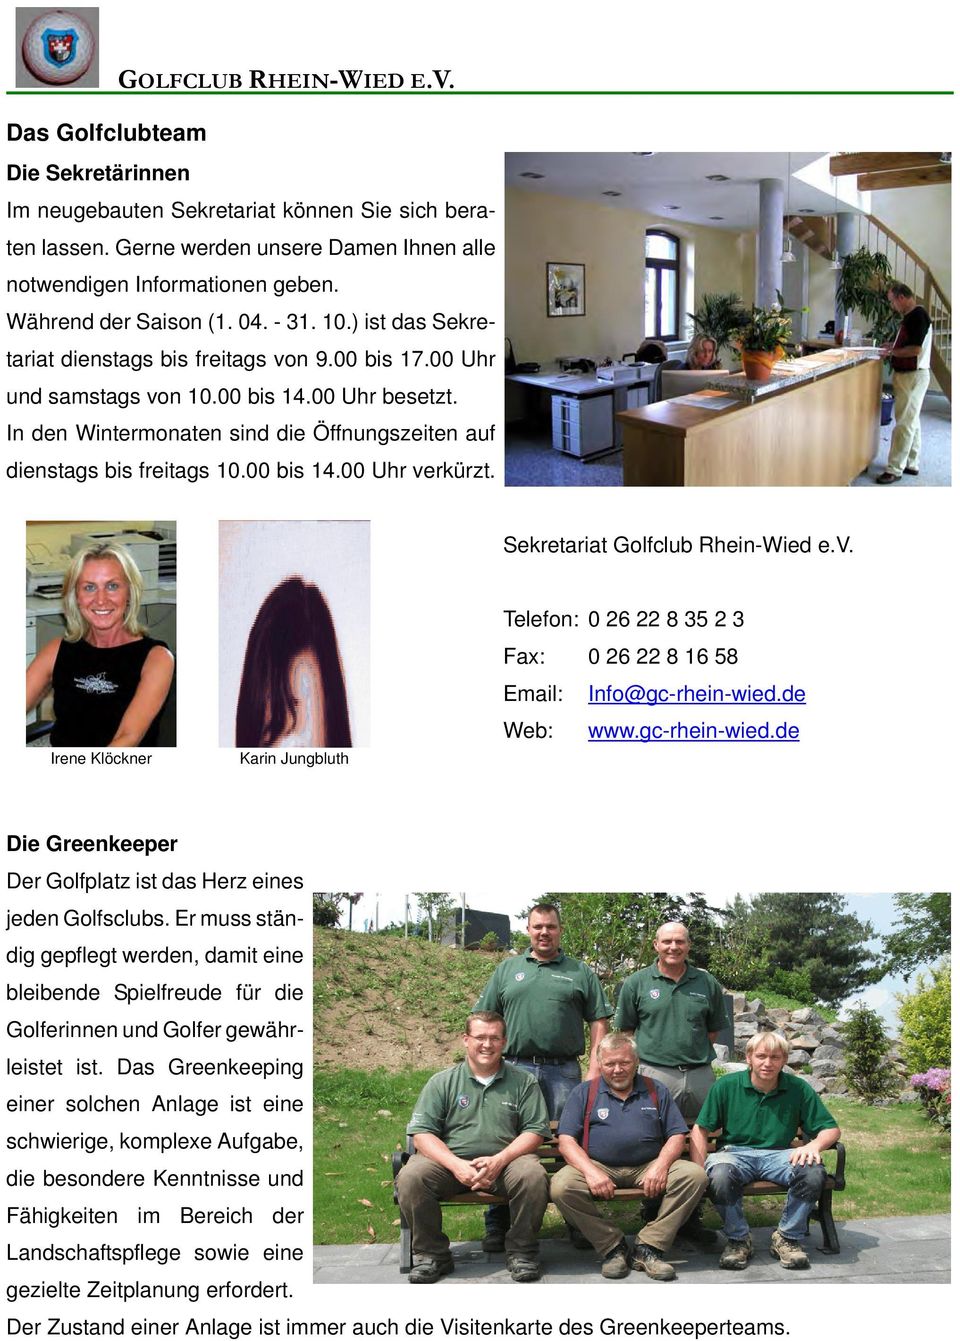 Sekretariat Golfclub Rhein-Wied e.v. Irene Klöckner Karin Jungbluth Telefon: 0 26 22 8 35 2 3 Fax: 0 26 22 8 16 58 Email: Info@gc-rhein-wied.